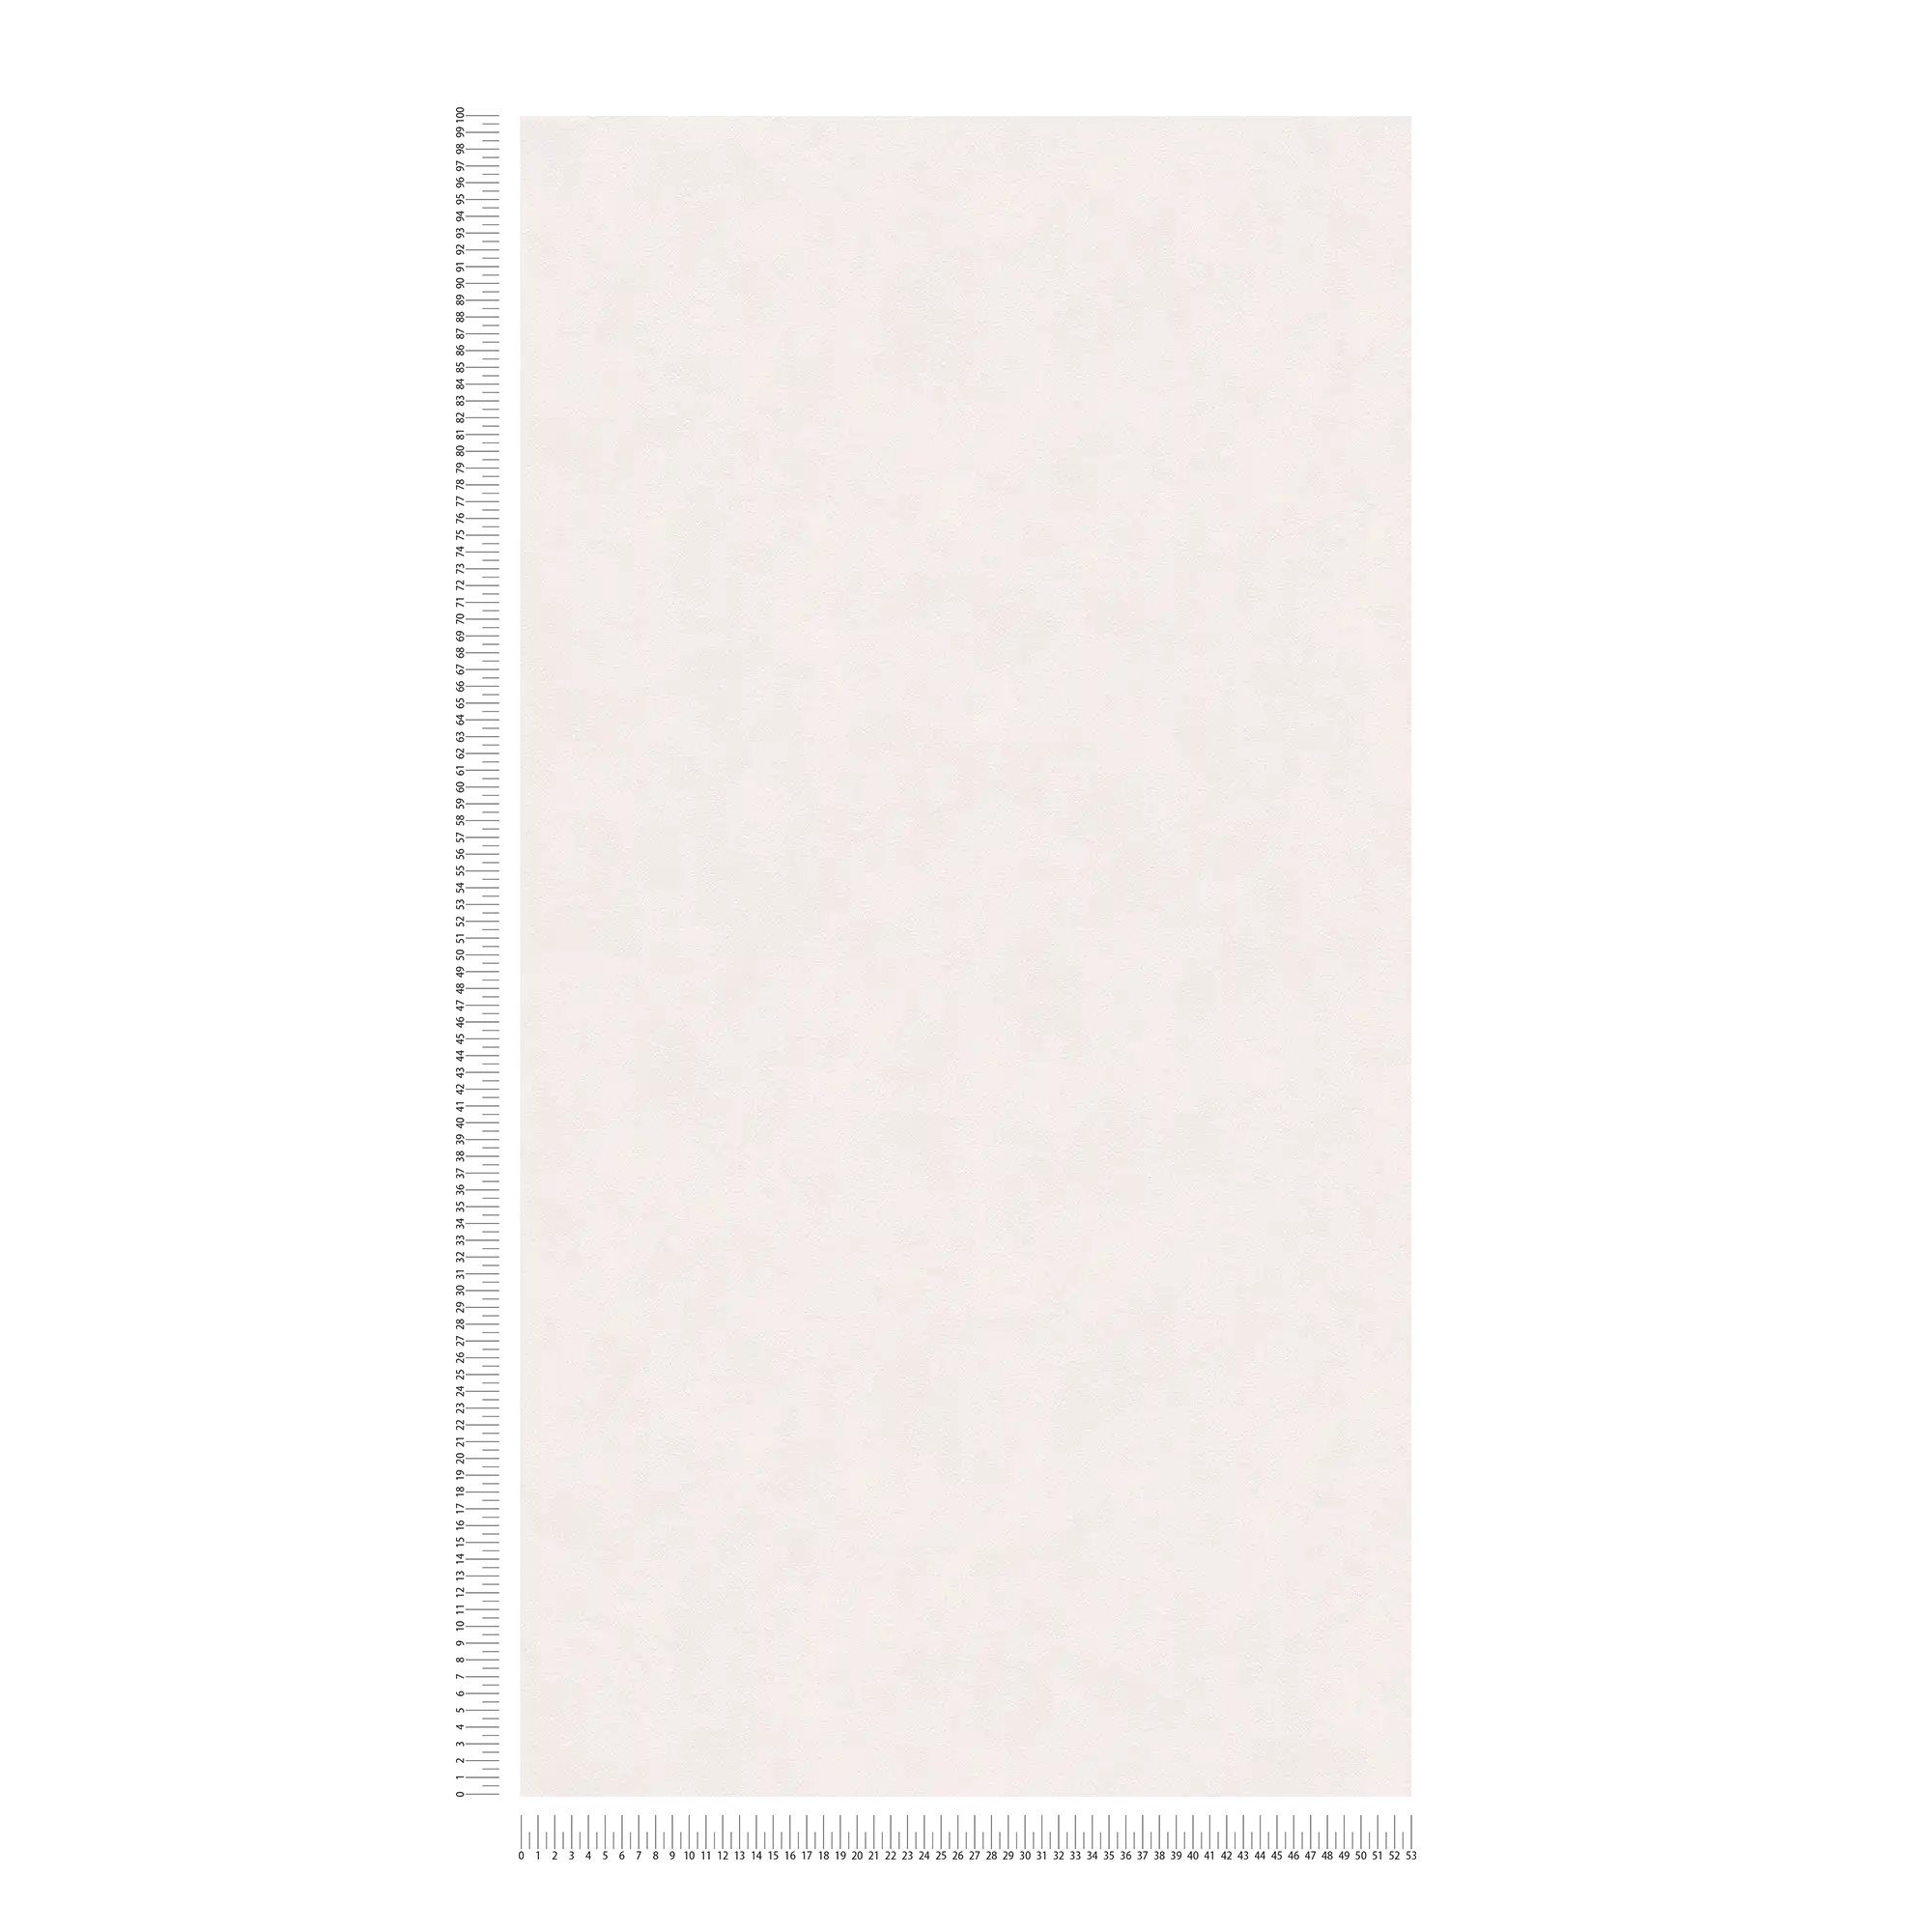             Tapete Weiß Grau uni mit seidenmattem Strukturmuster
        